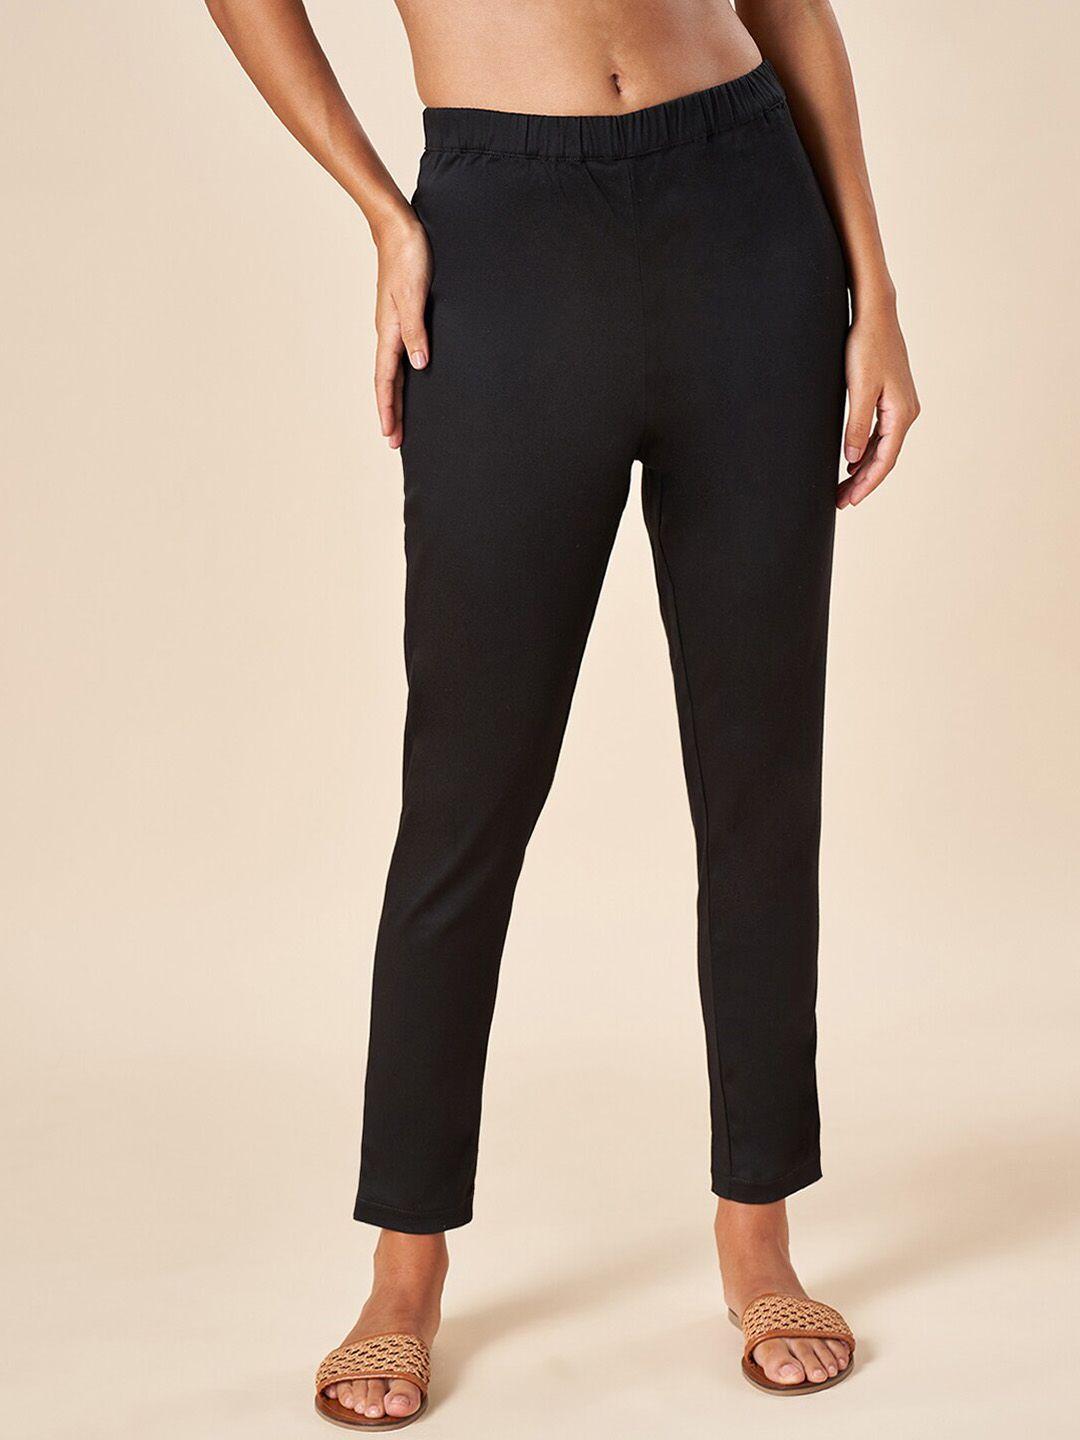 akkriti by pantaloons women black slim fit trousers